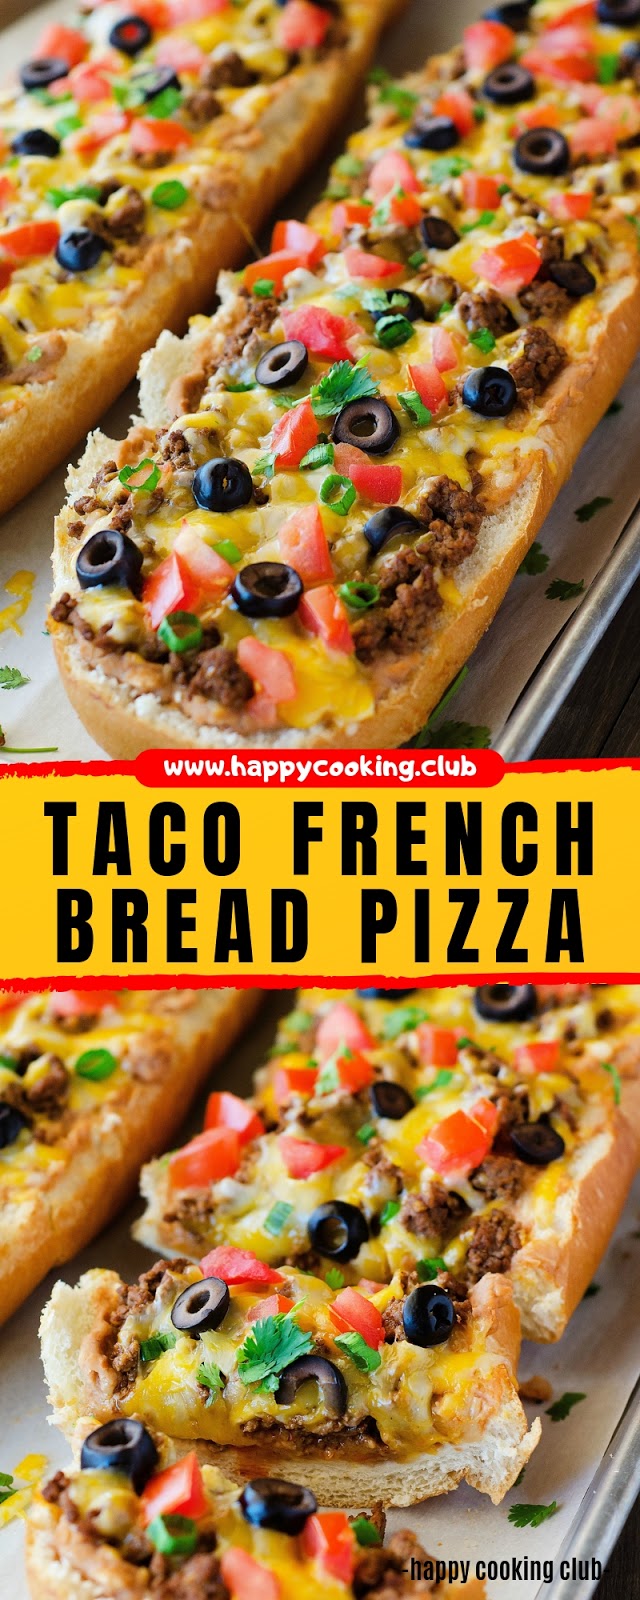 TACO FRENCH BREAD PIZZA